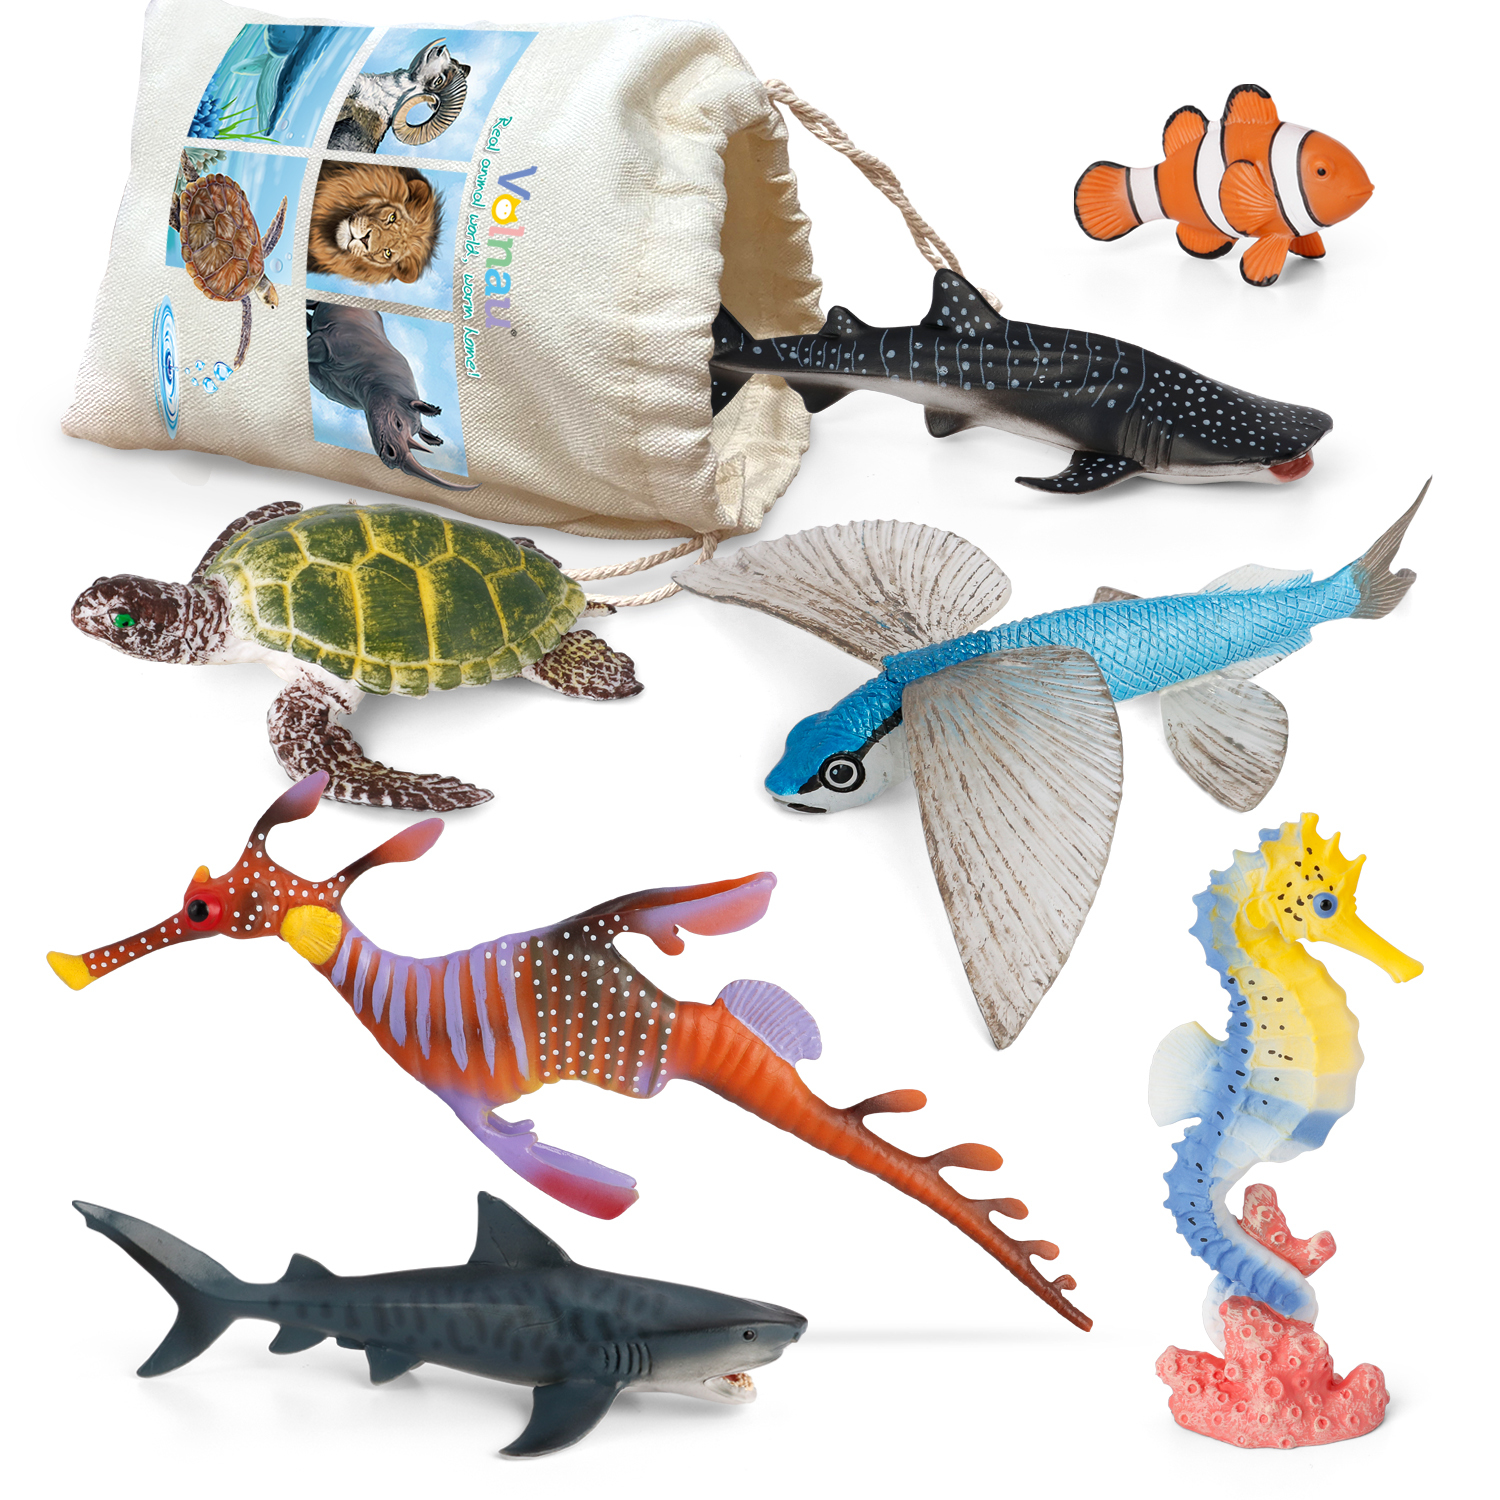 20pcs Kids Plastic Marine Animal Toys Turtles Model Figures Party Favors 